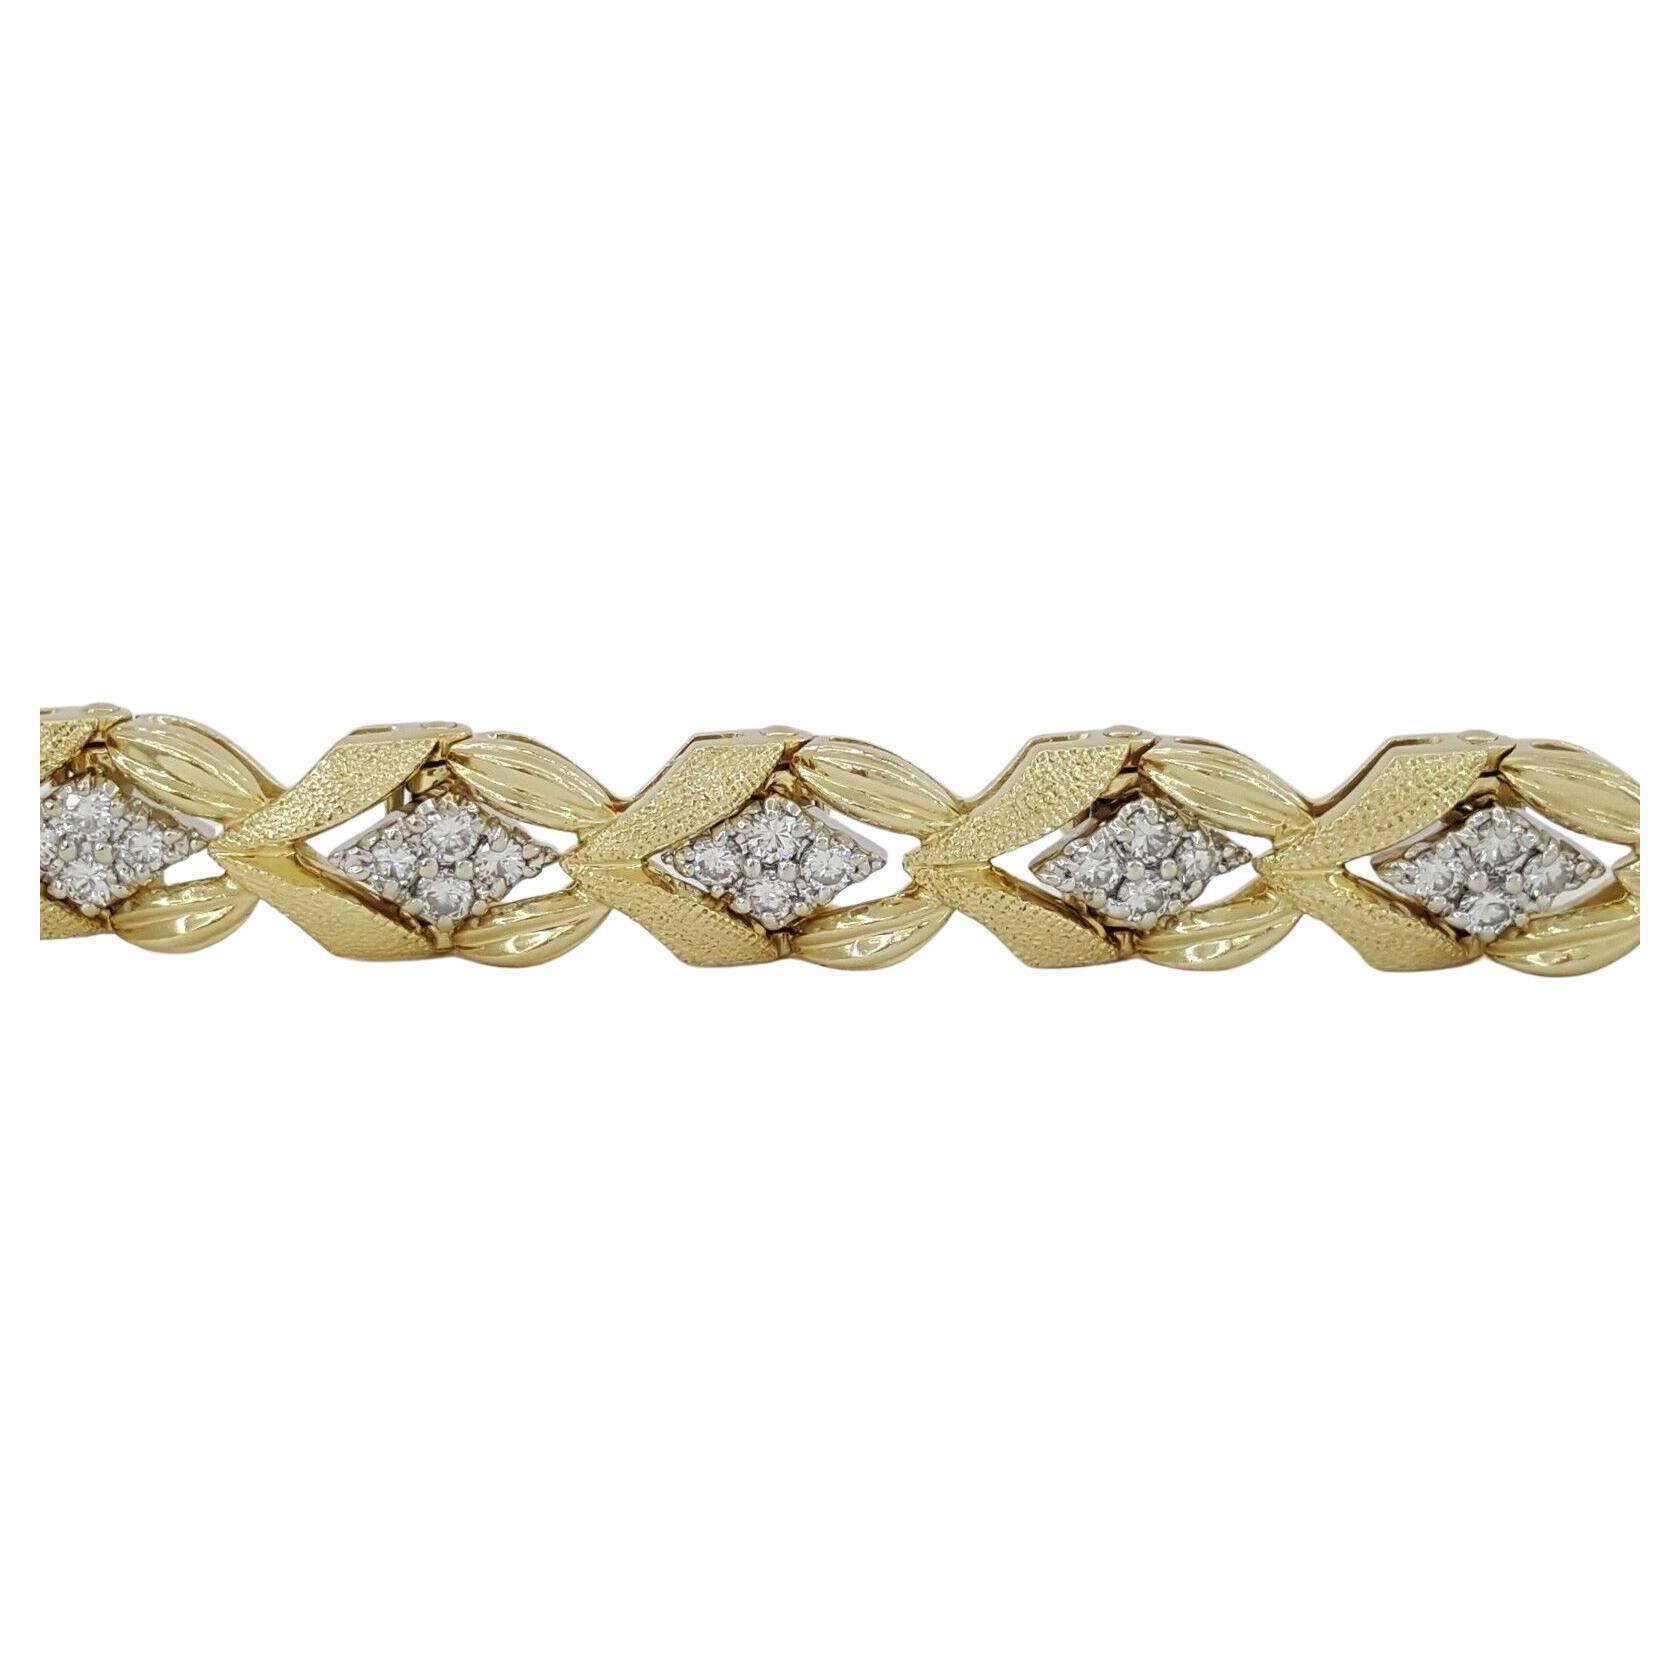 Vintage 1.76 ct total weight 14K Yellow Gold Round Brilliant Cut Diamond Ribbon Tennis Bracelet. 

The bracelet weighs 31.1 grams, 6